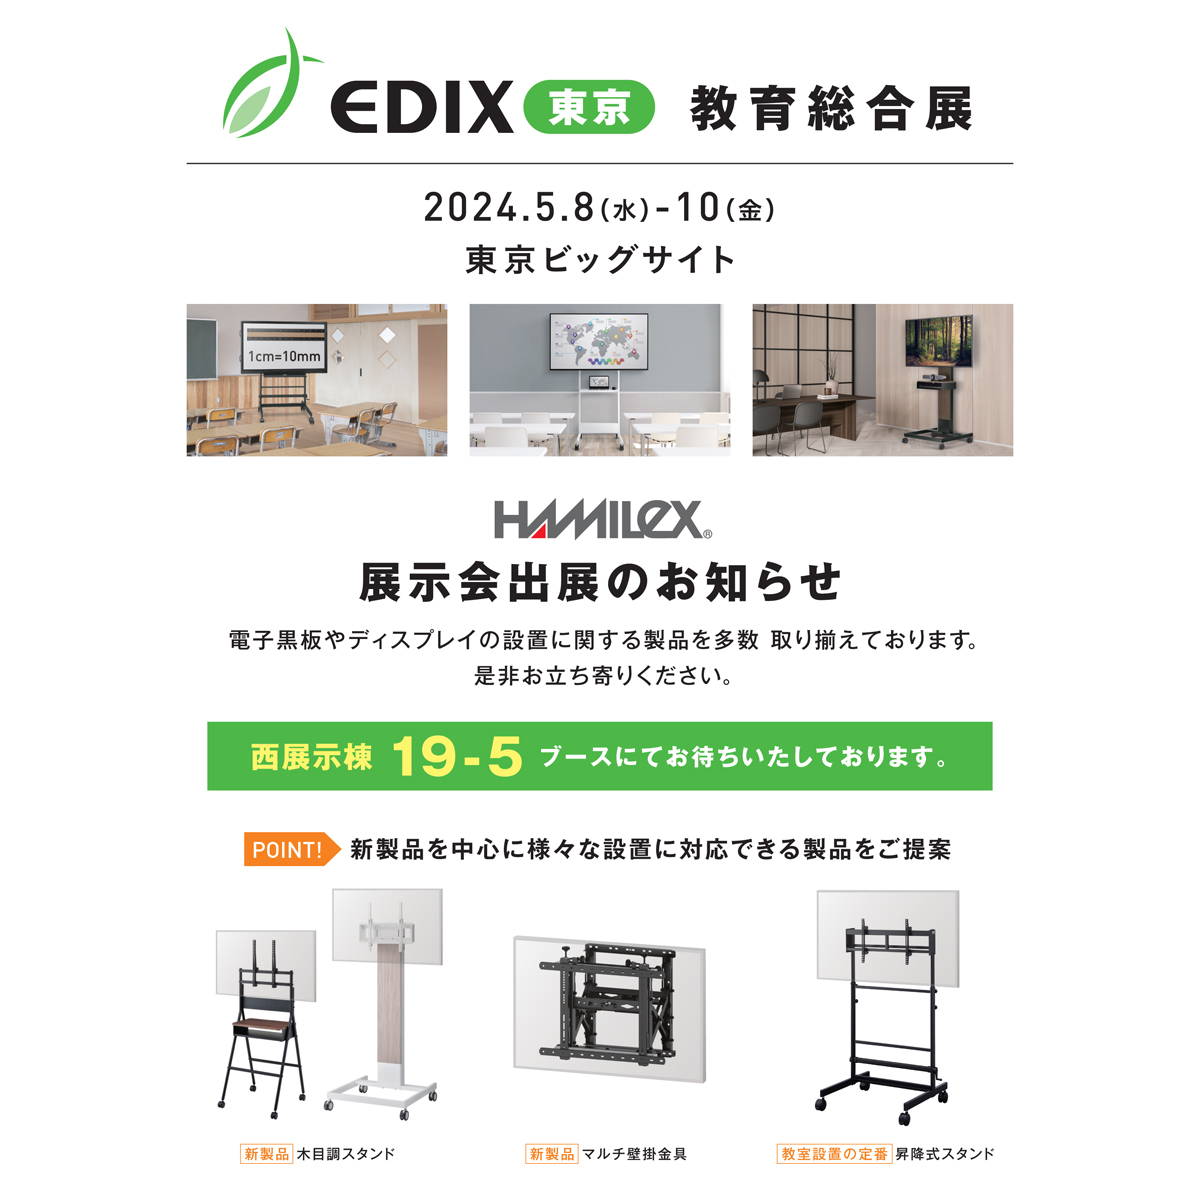 『EDIX 東京 教育総合展』に出展いたします